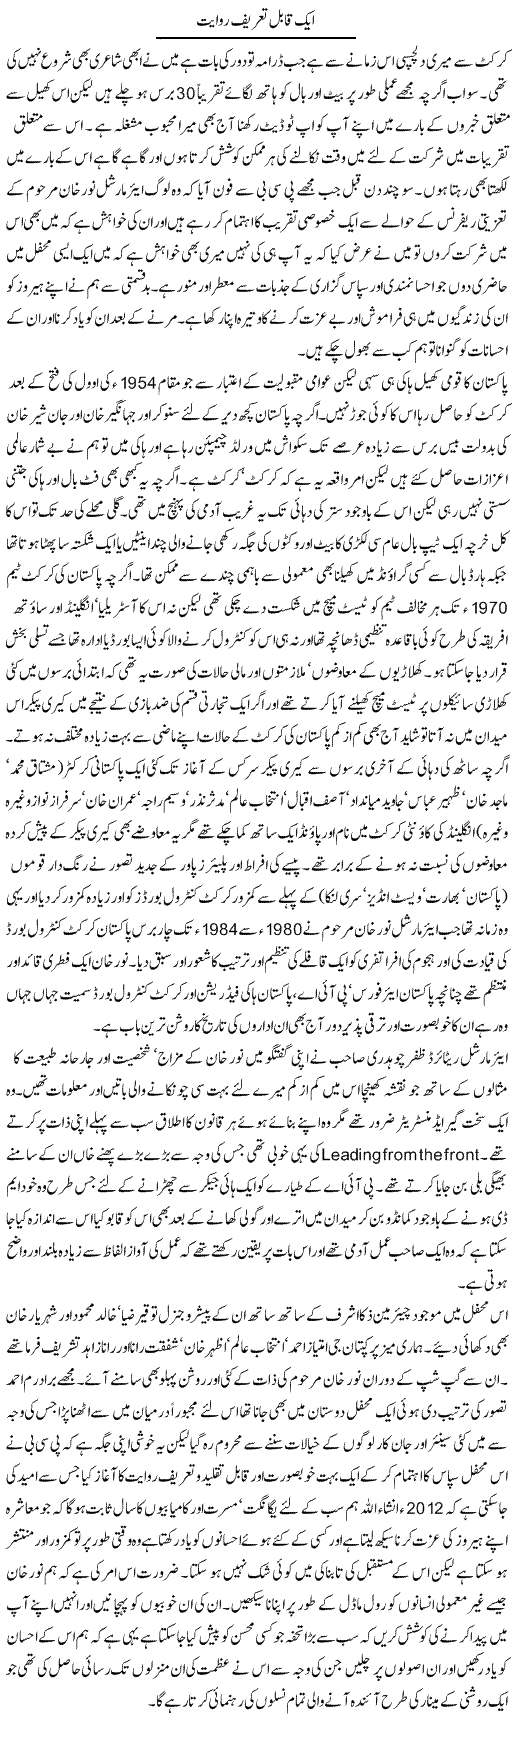 Pakistan Cricket Express Column Amjad Islam 6 January 2012